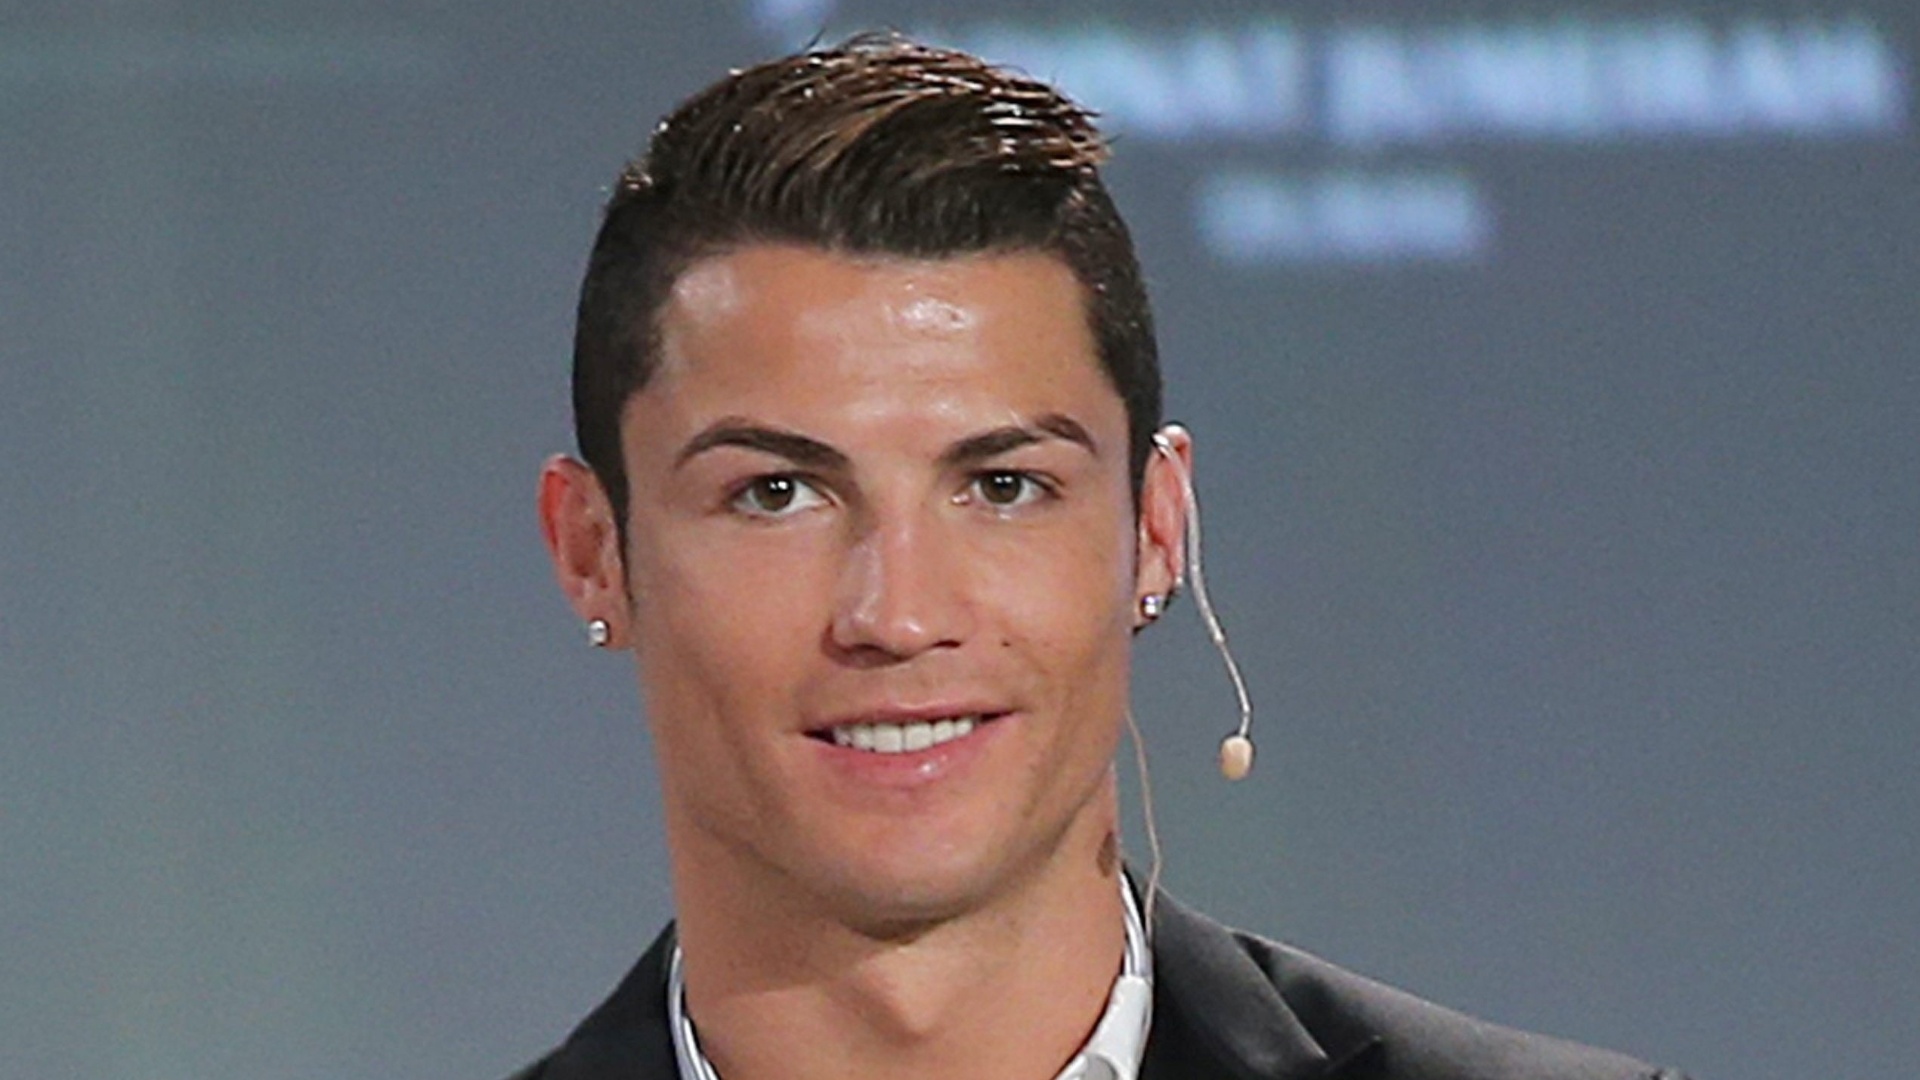 Cristiano-Ronaldo-2015-Hairstyle-Wallpaper